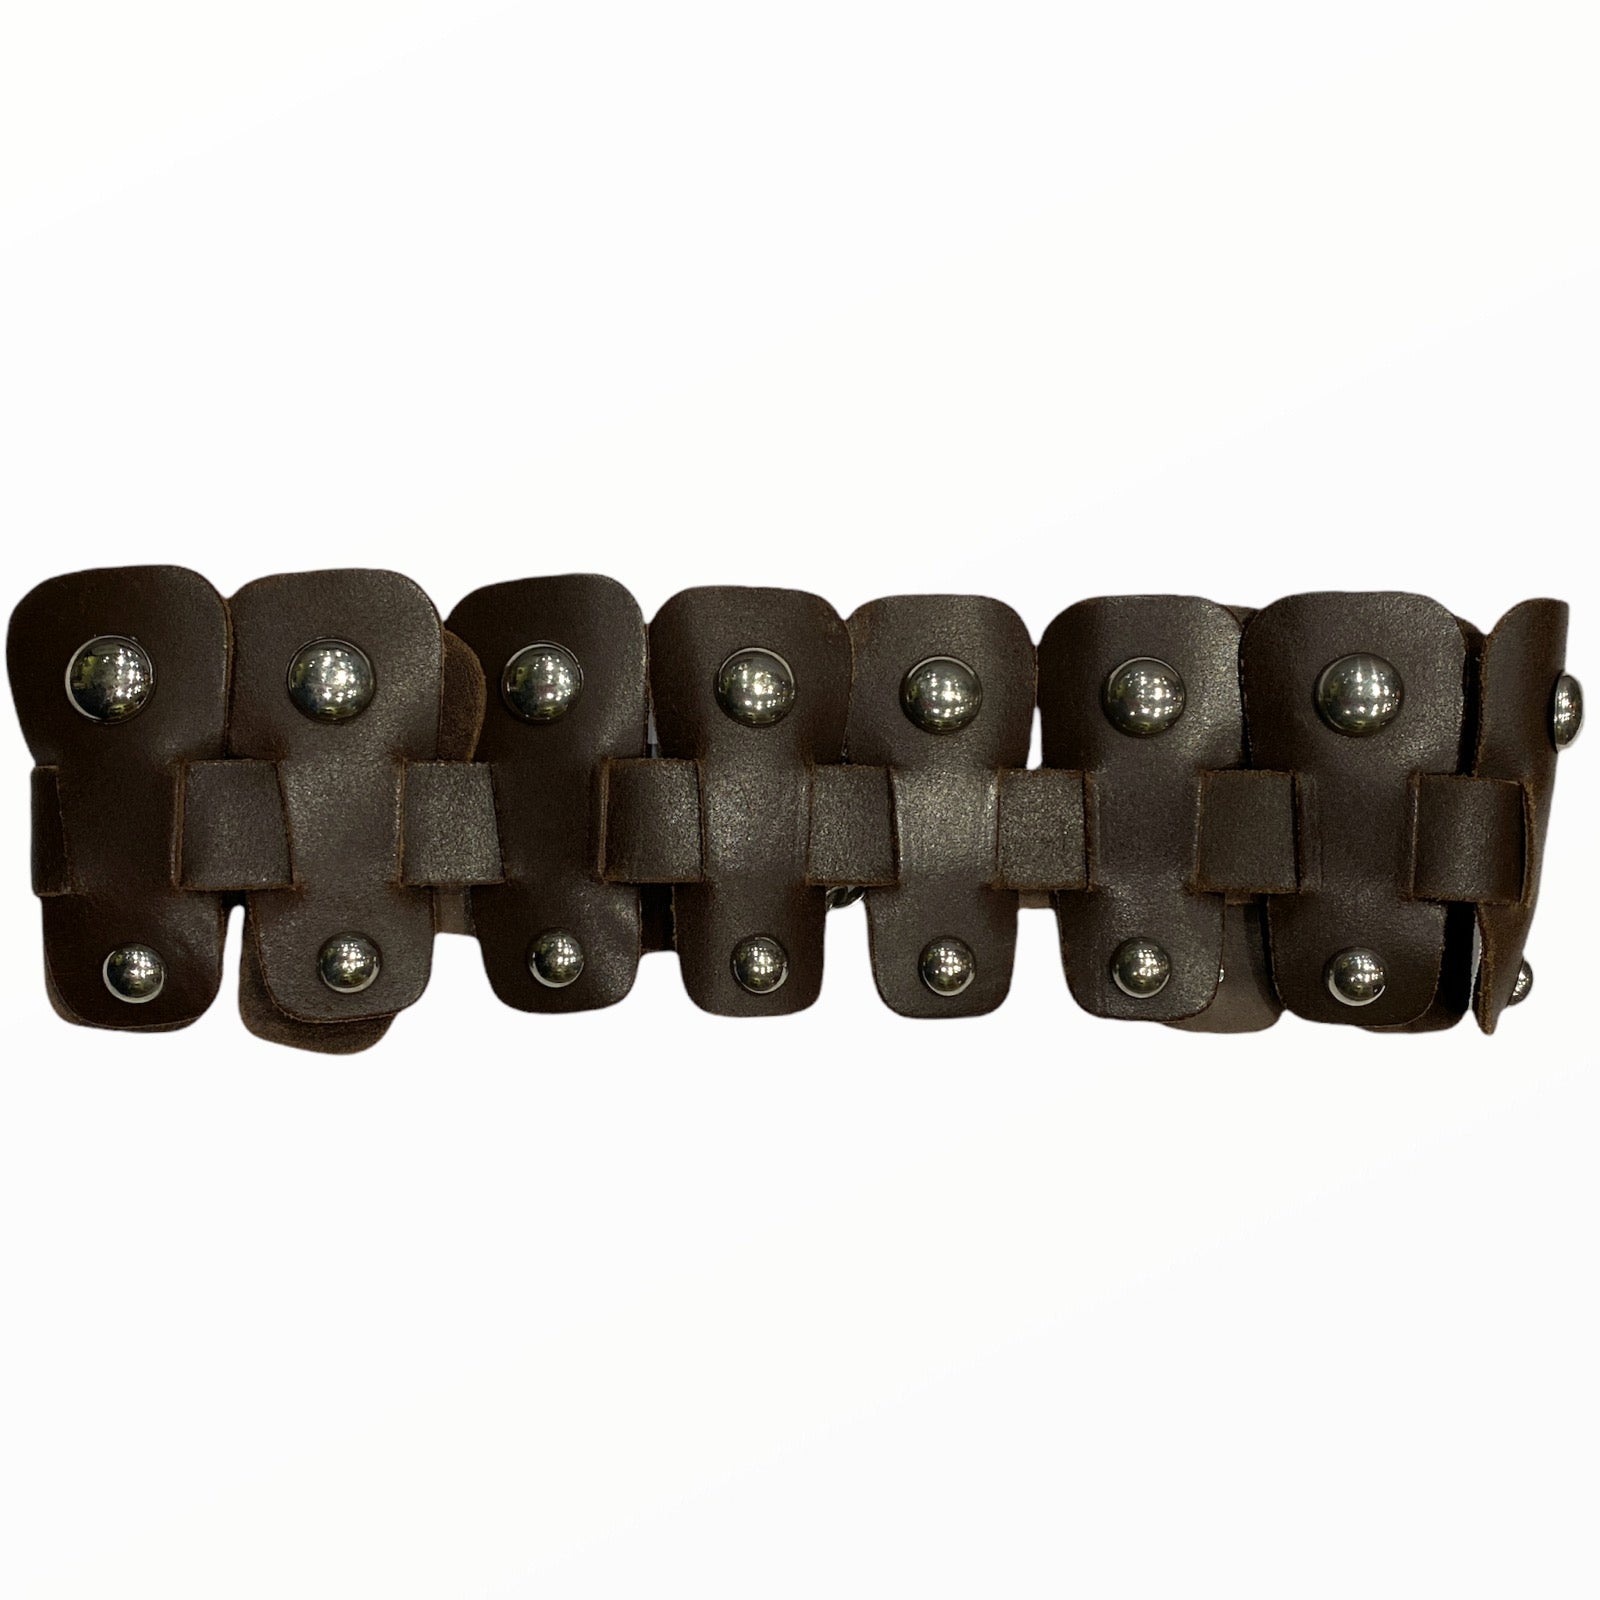 Dark brown leather belt with silver metals